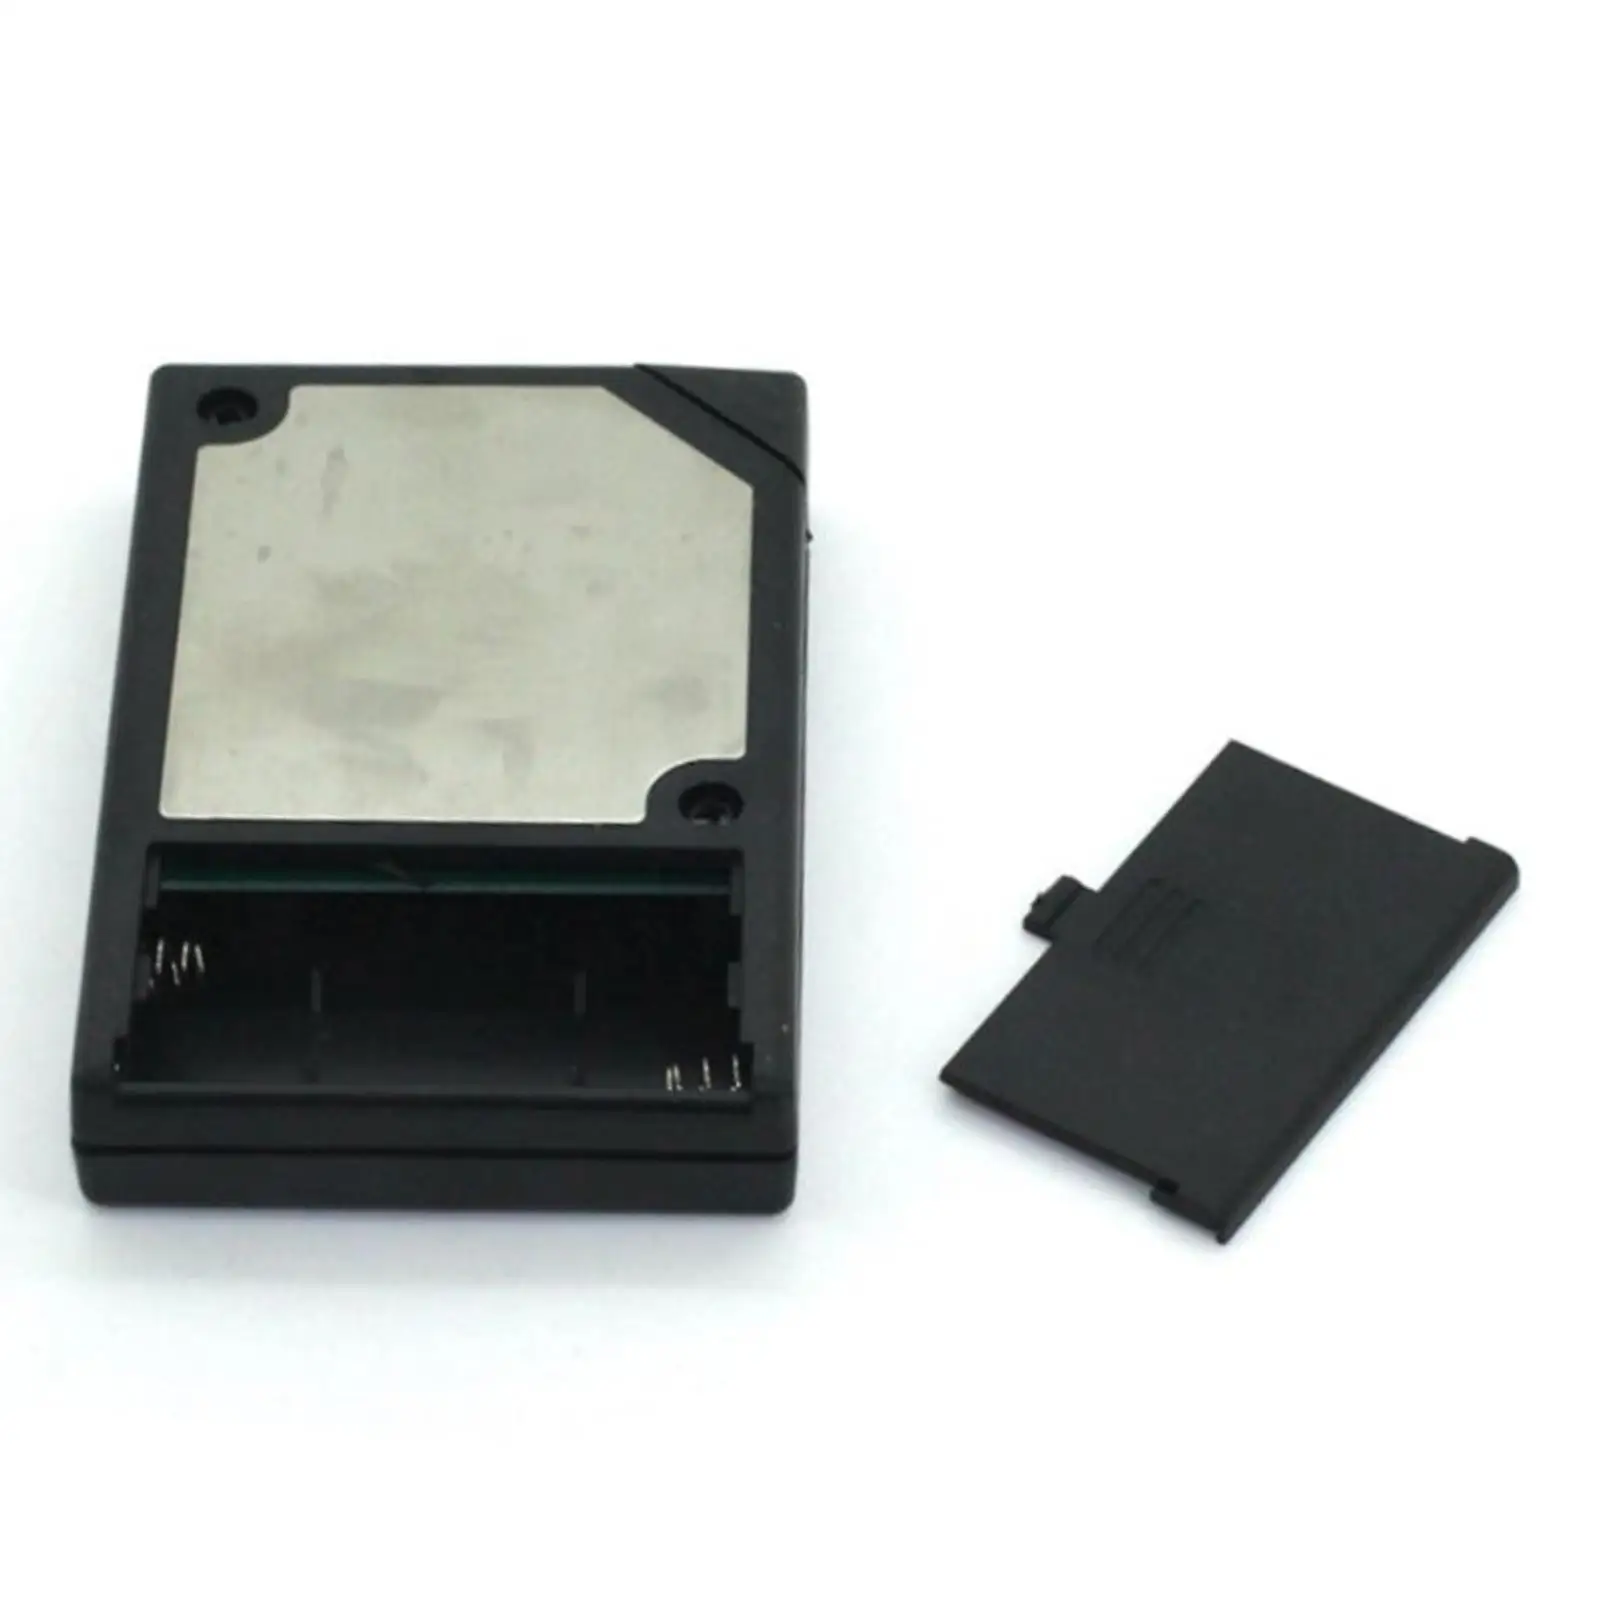 Reliable Diamond Tester Diamond Selector for Novice and Expert Test Tool Gem